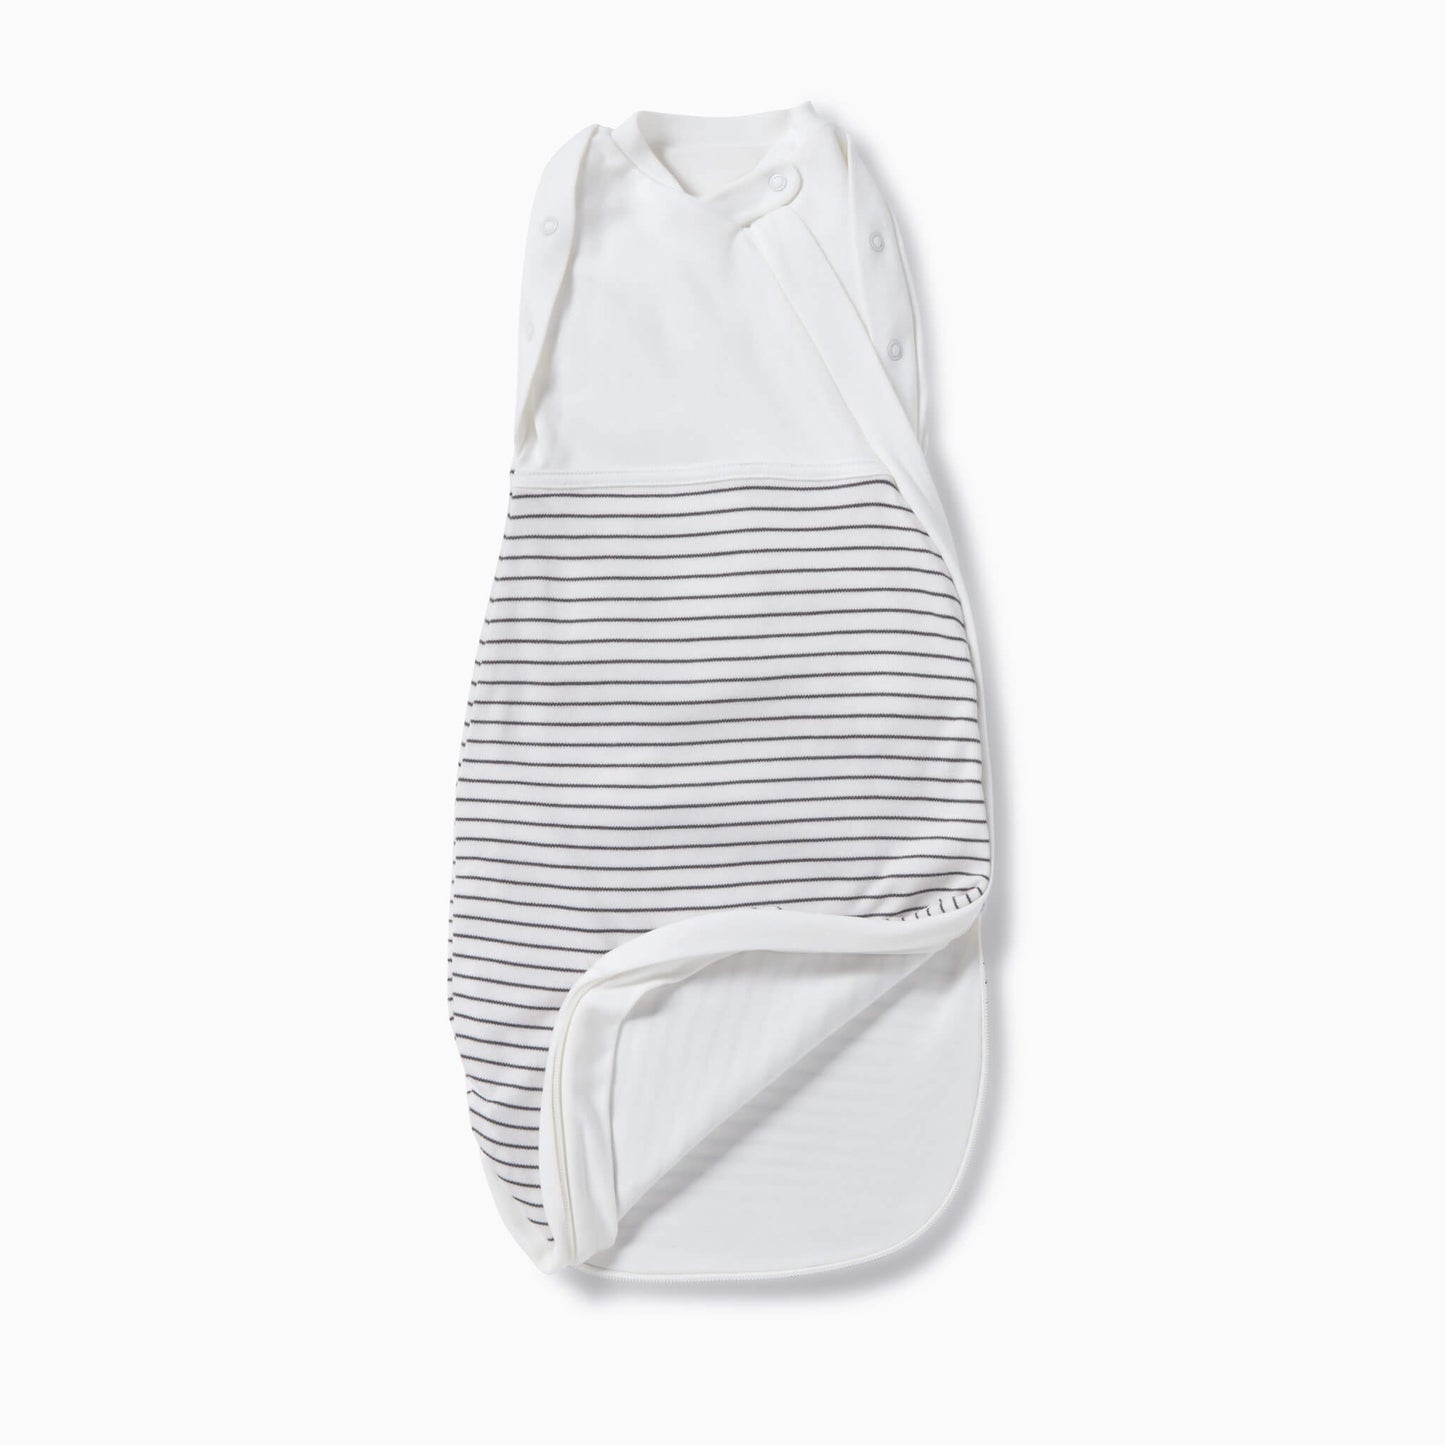 MORI Newborn Swaddle Bag (Grey Stripe)